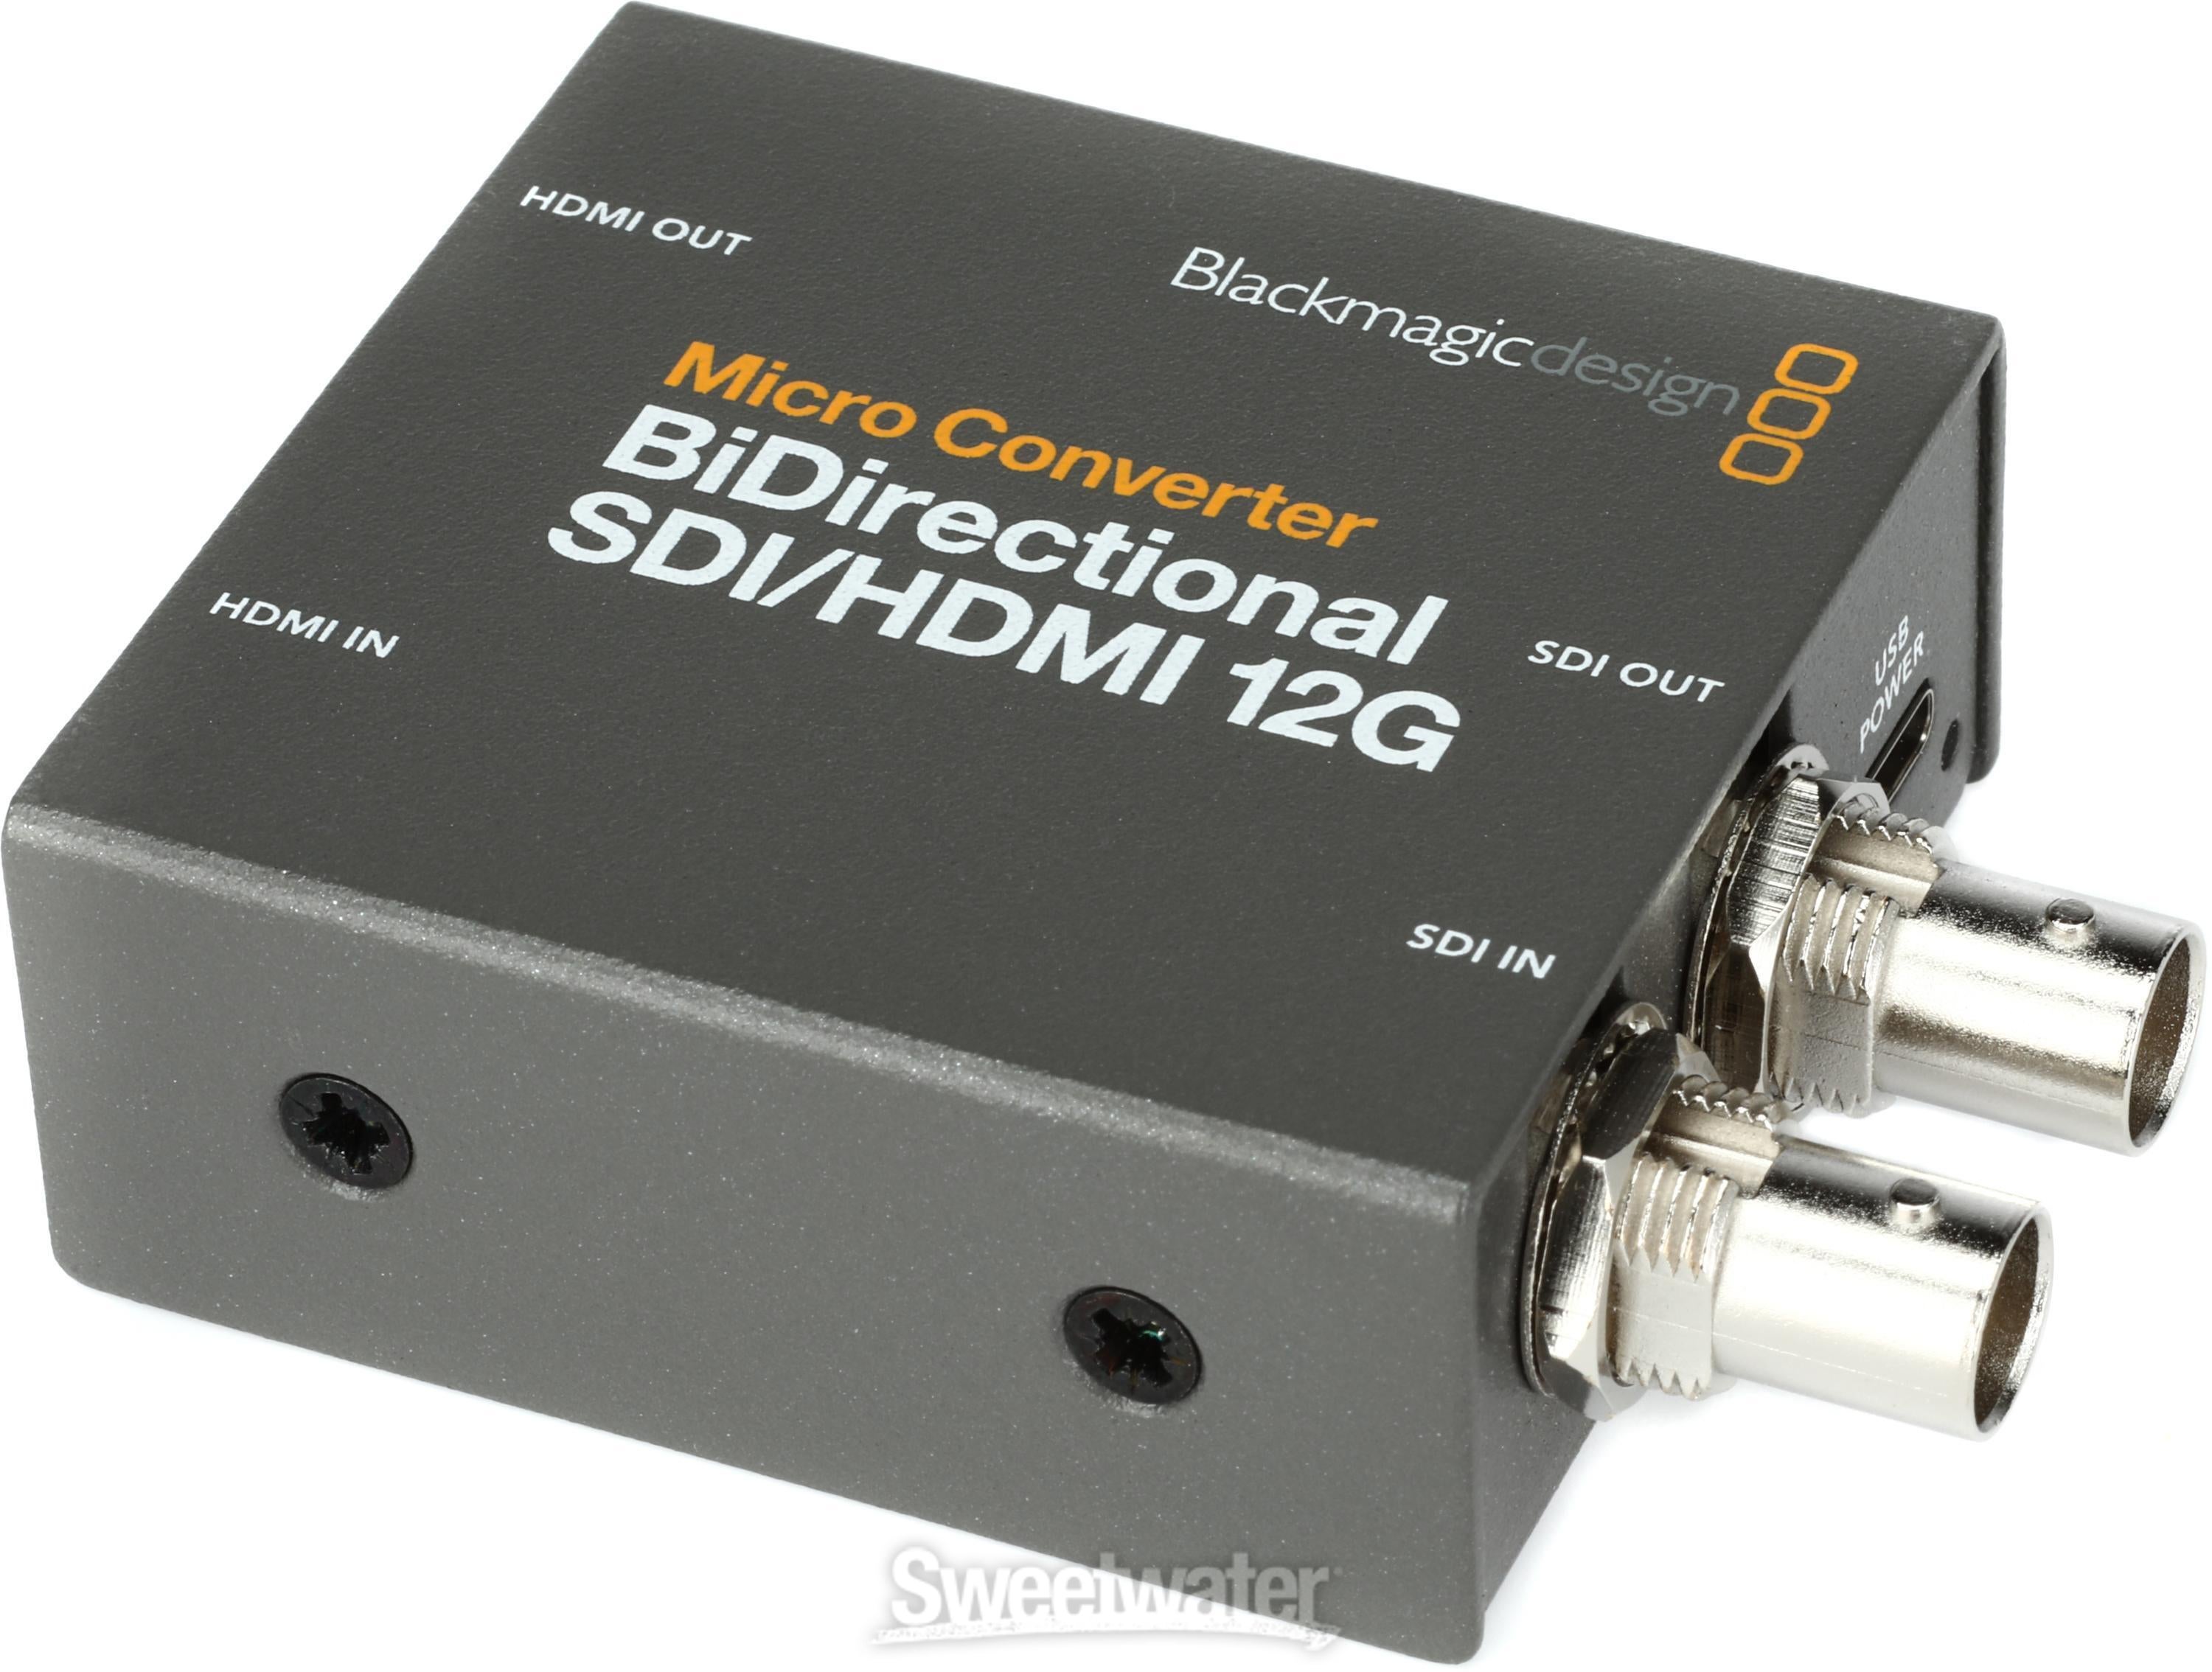 Blackmagic Design Bidirectional SDI/HDMI 12G Micro Converter Sweetwater